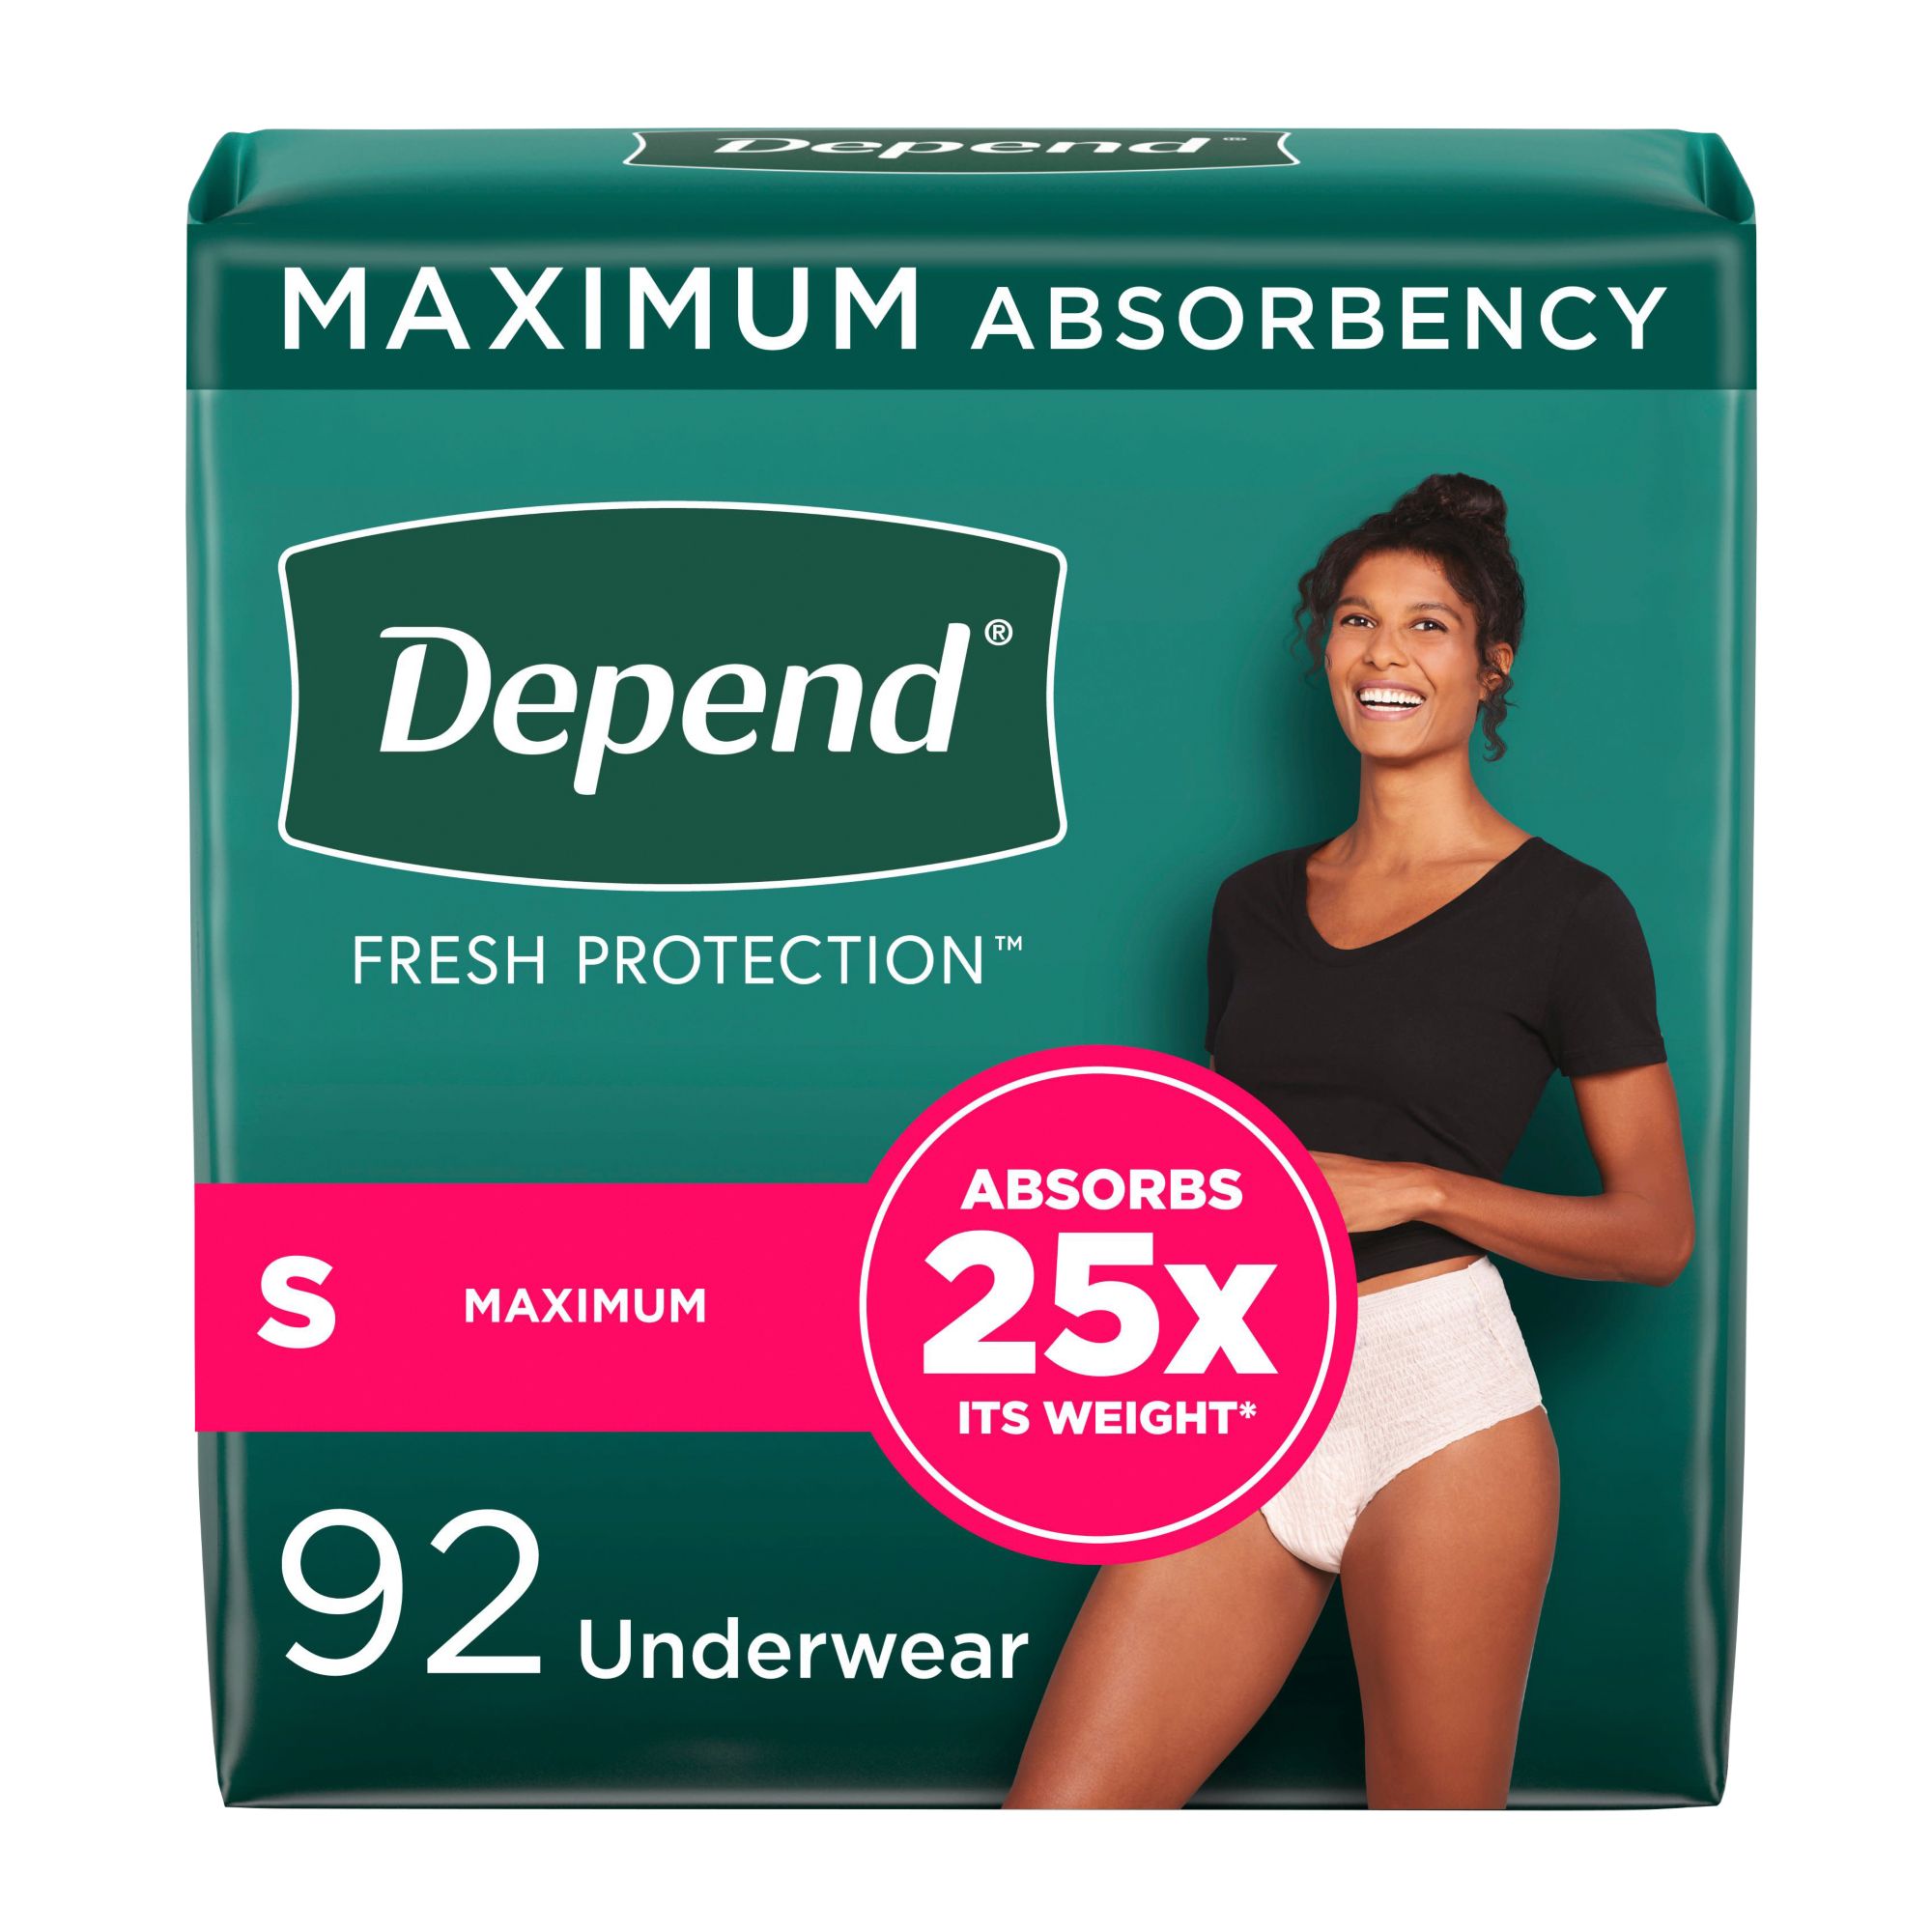 Always Discreet Maximum Size Small/Medium Incontinence Underwear